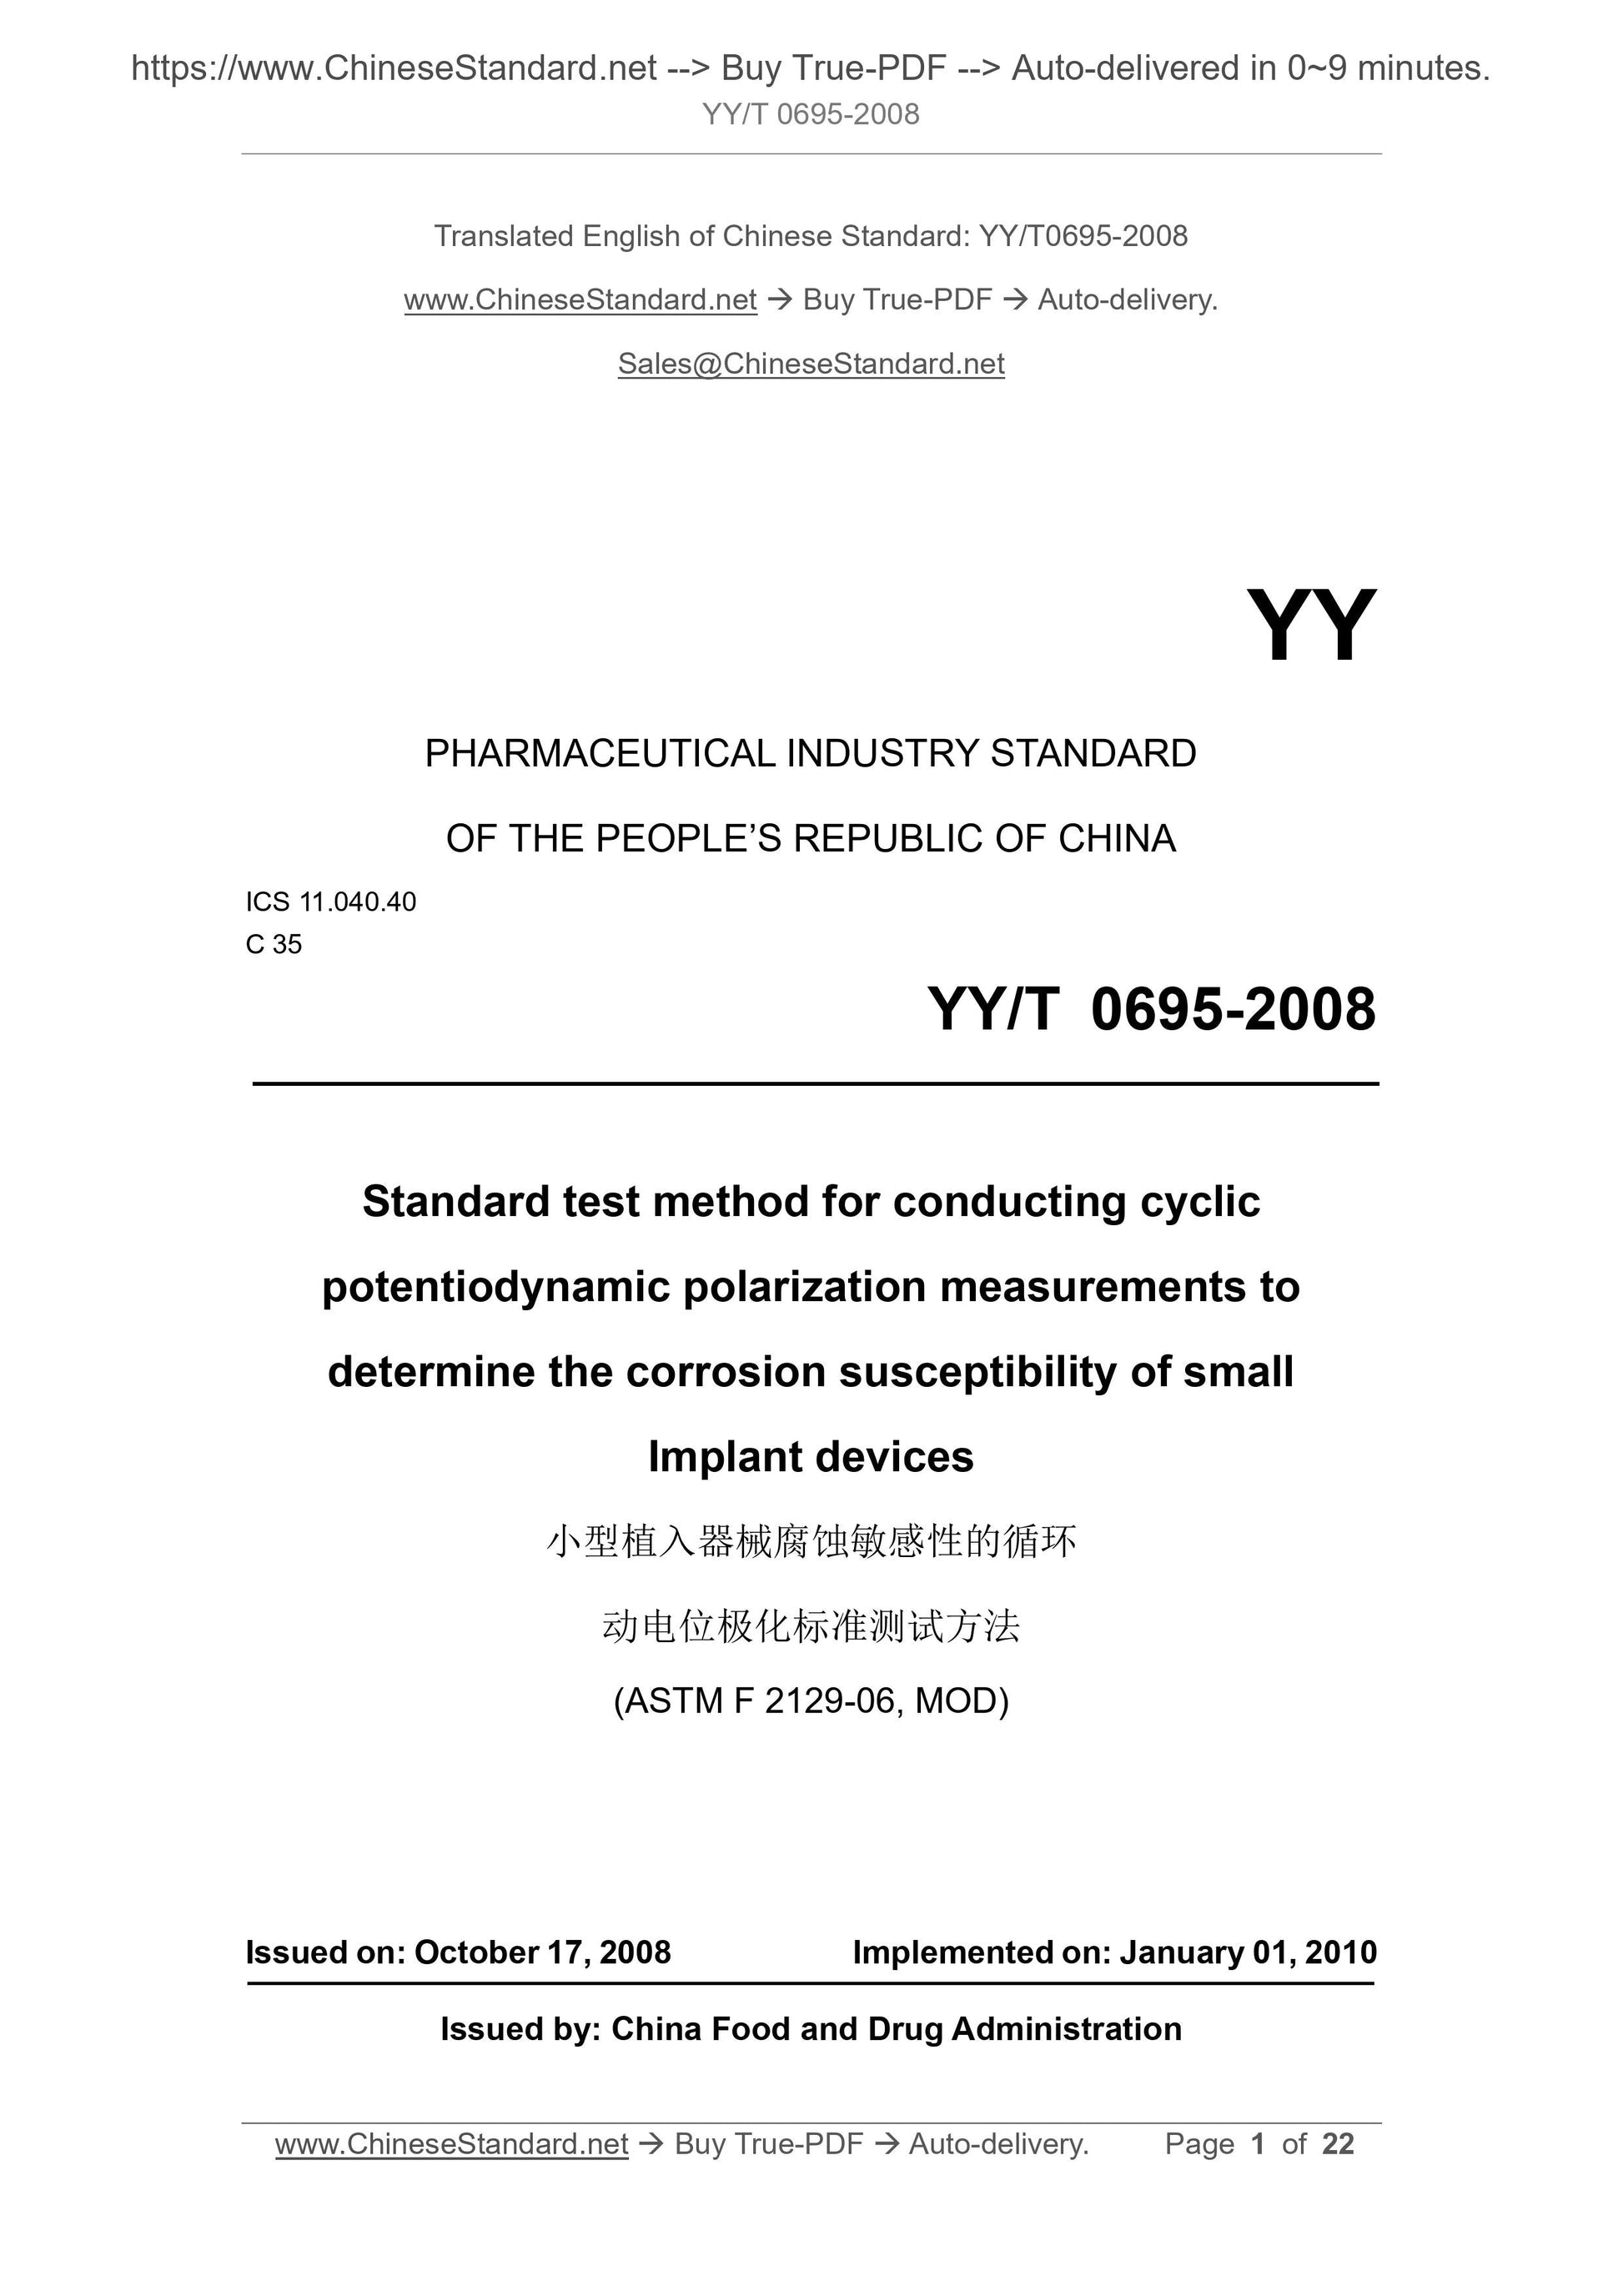 YY/T 0695-2008 Page 1